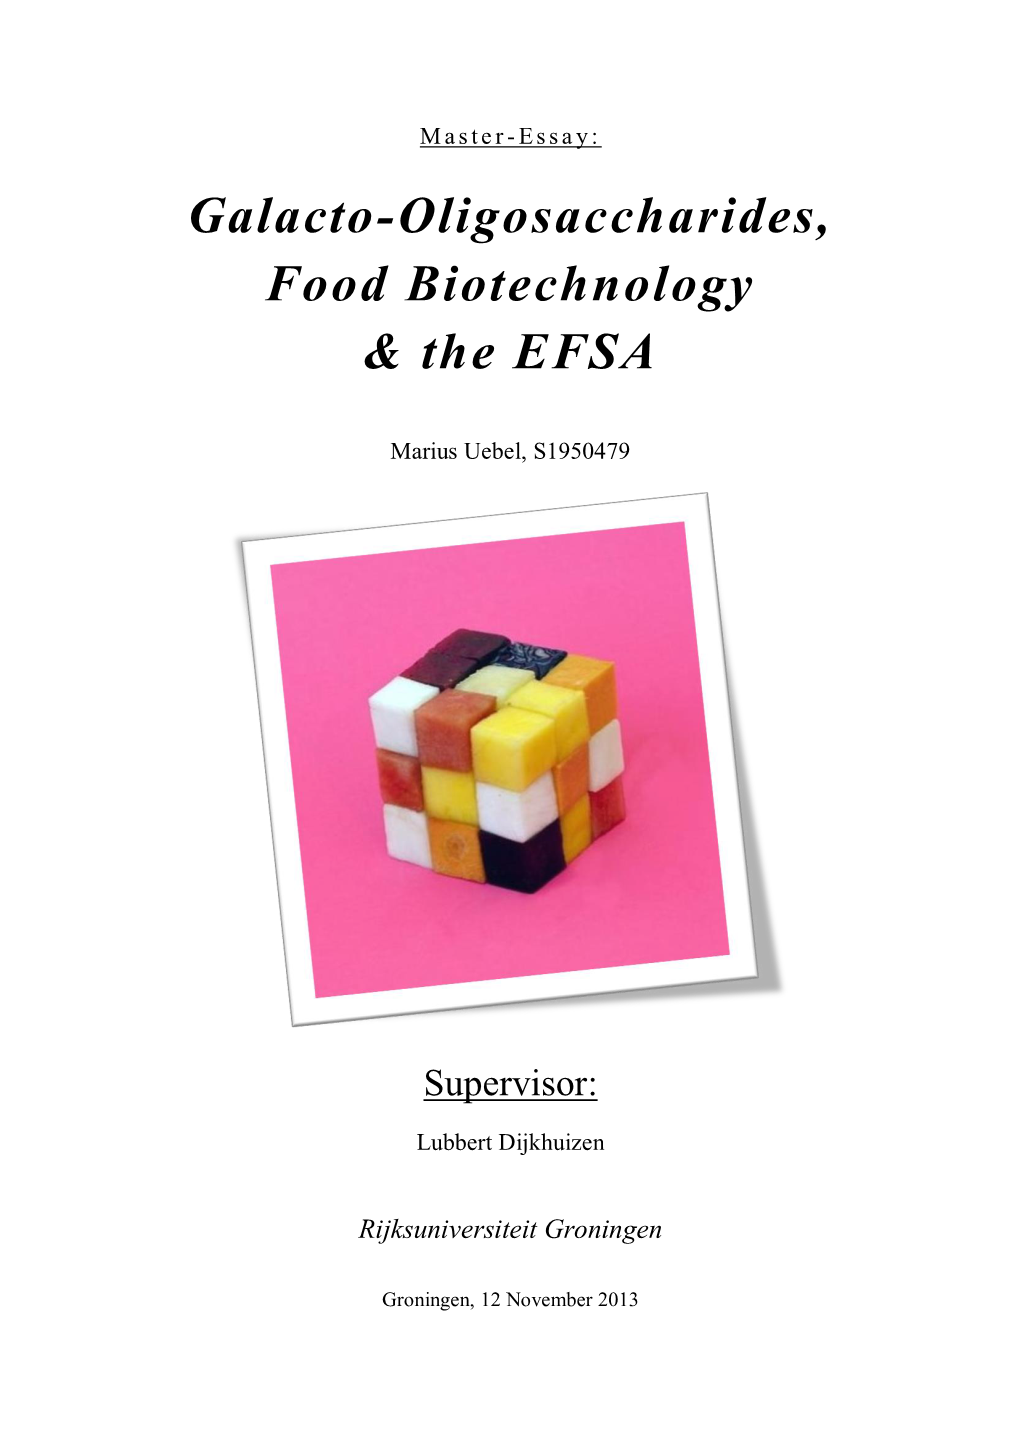 Galacto-Oligosaccharides, Food Biotechnology & the EFSA